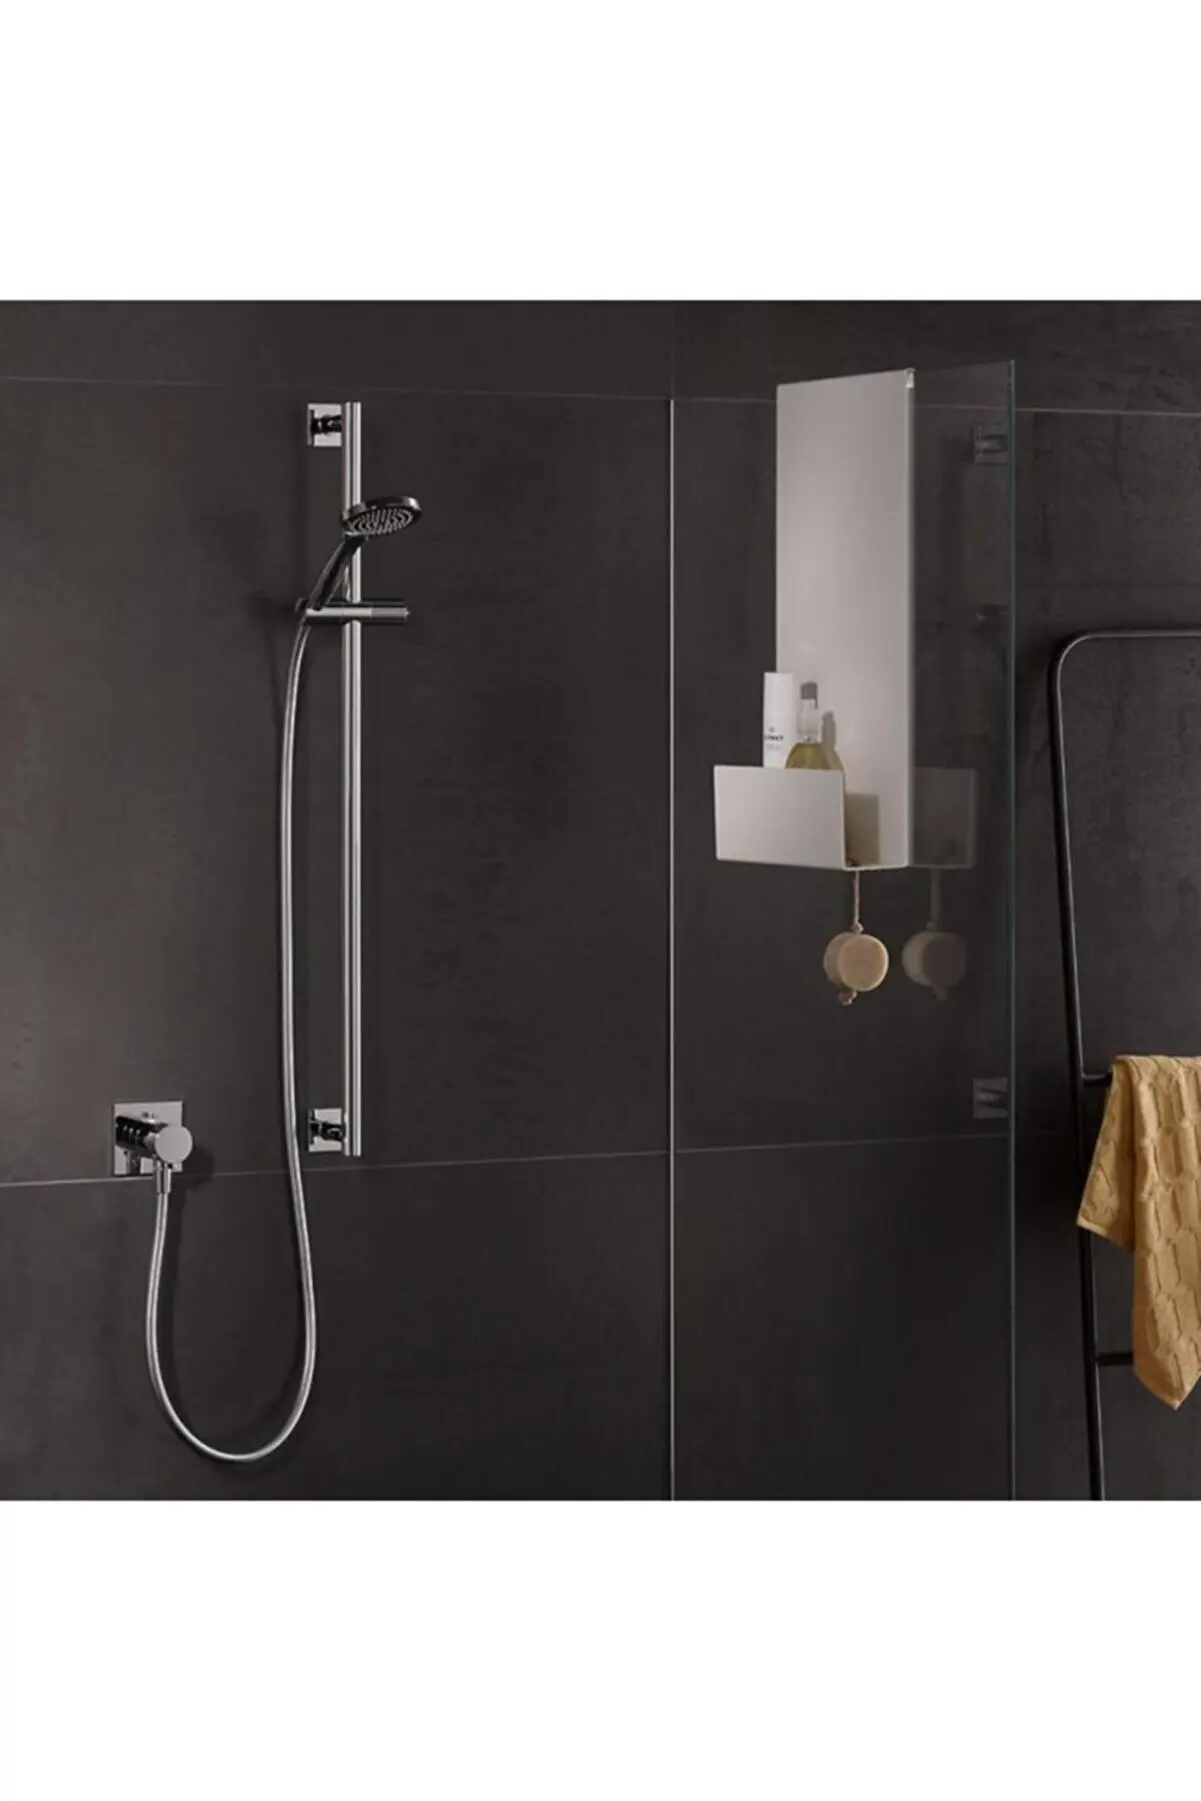 https://ae01.alicdn.com/kf/U57c33b58f6244163b3a1e50af79d3586e/Steel-Shower-Shelf-Stainless-Metal-White-Black-Bathroom-Shelf-Wall-Hanger-Shampoo-Organizer-Modern-Aesthetic-Minimalist.jpg